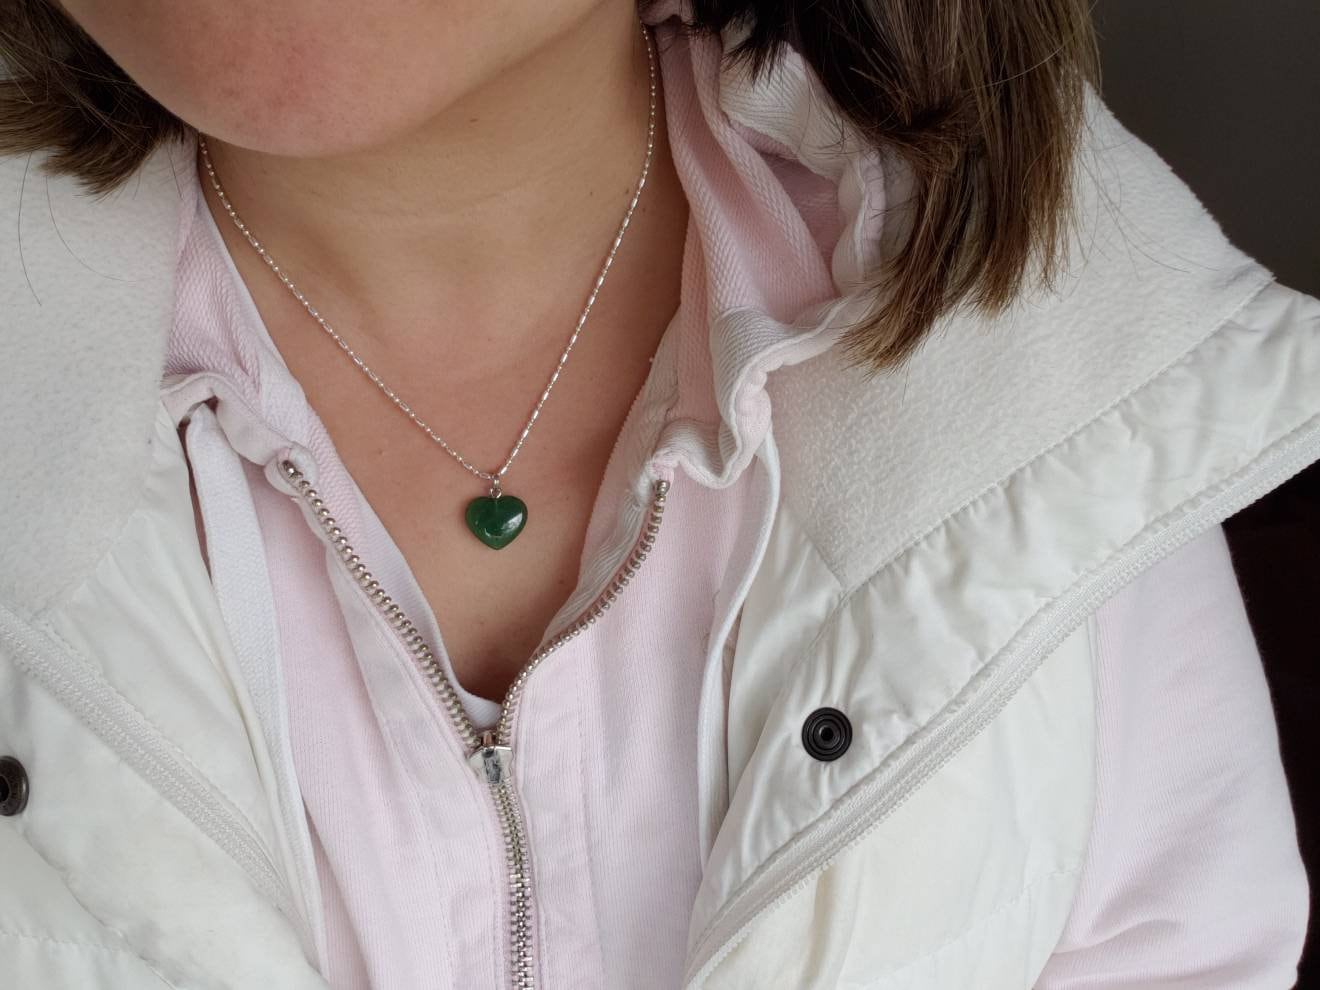 green jade heart charm